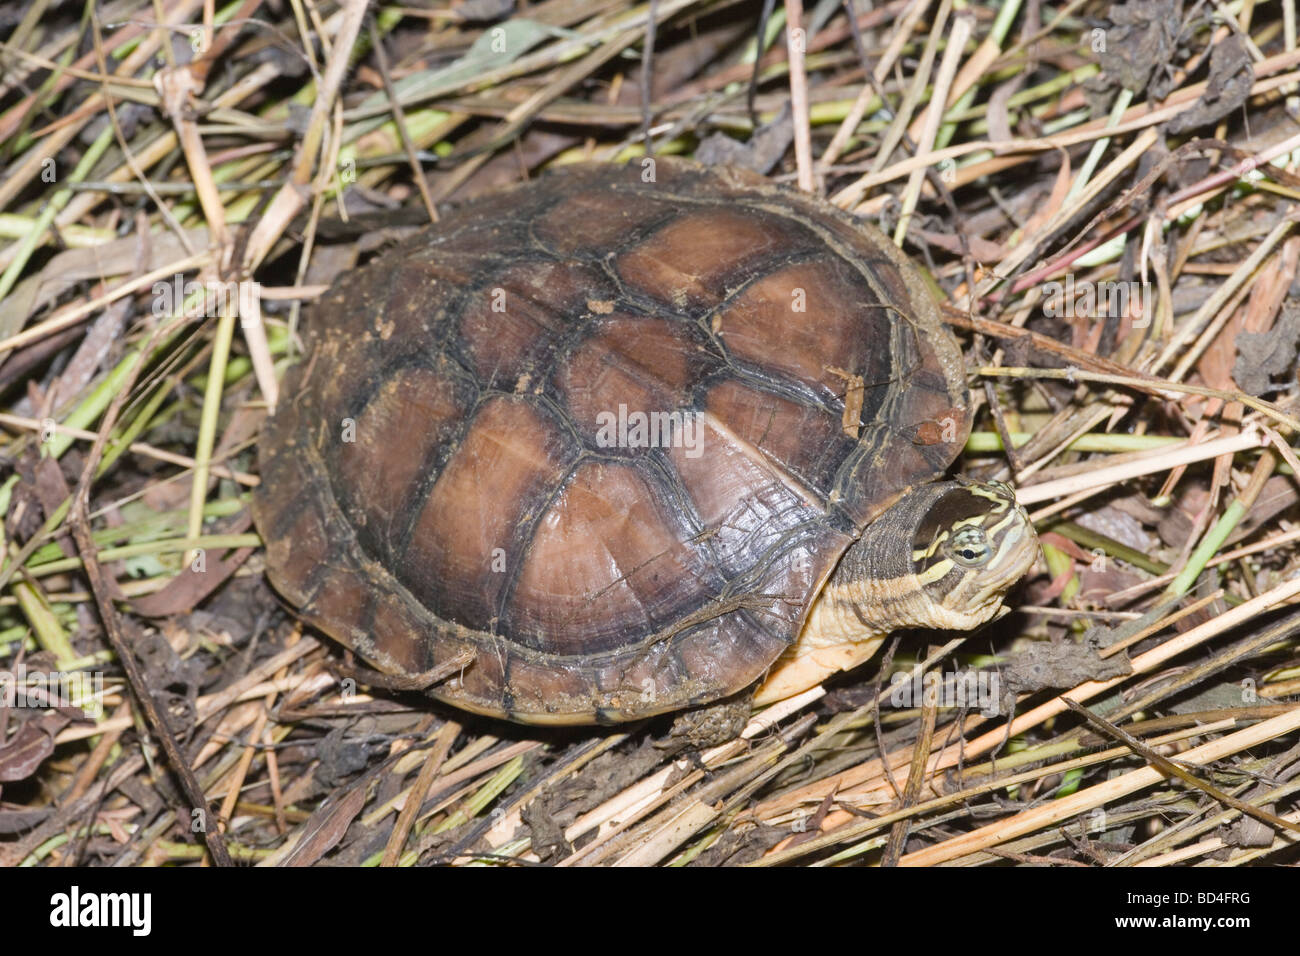 Stripe-necked Turtle (Ocadia sinensis). Adult, on land, exposure to sunlight. Sun basking. Ectothermic. Stock Photo